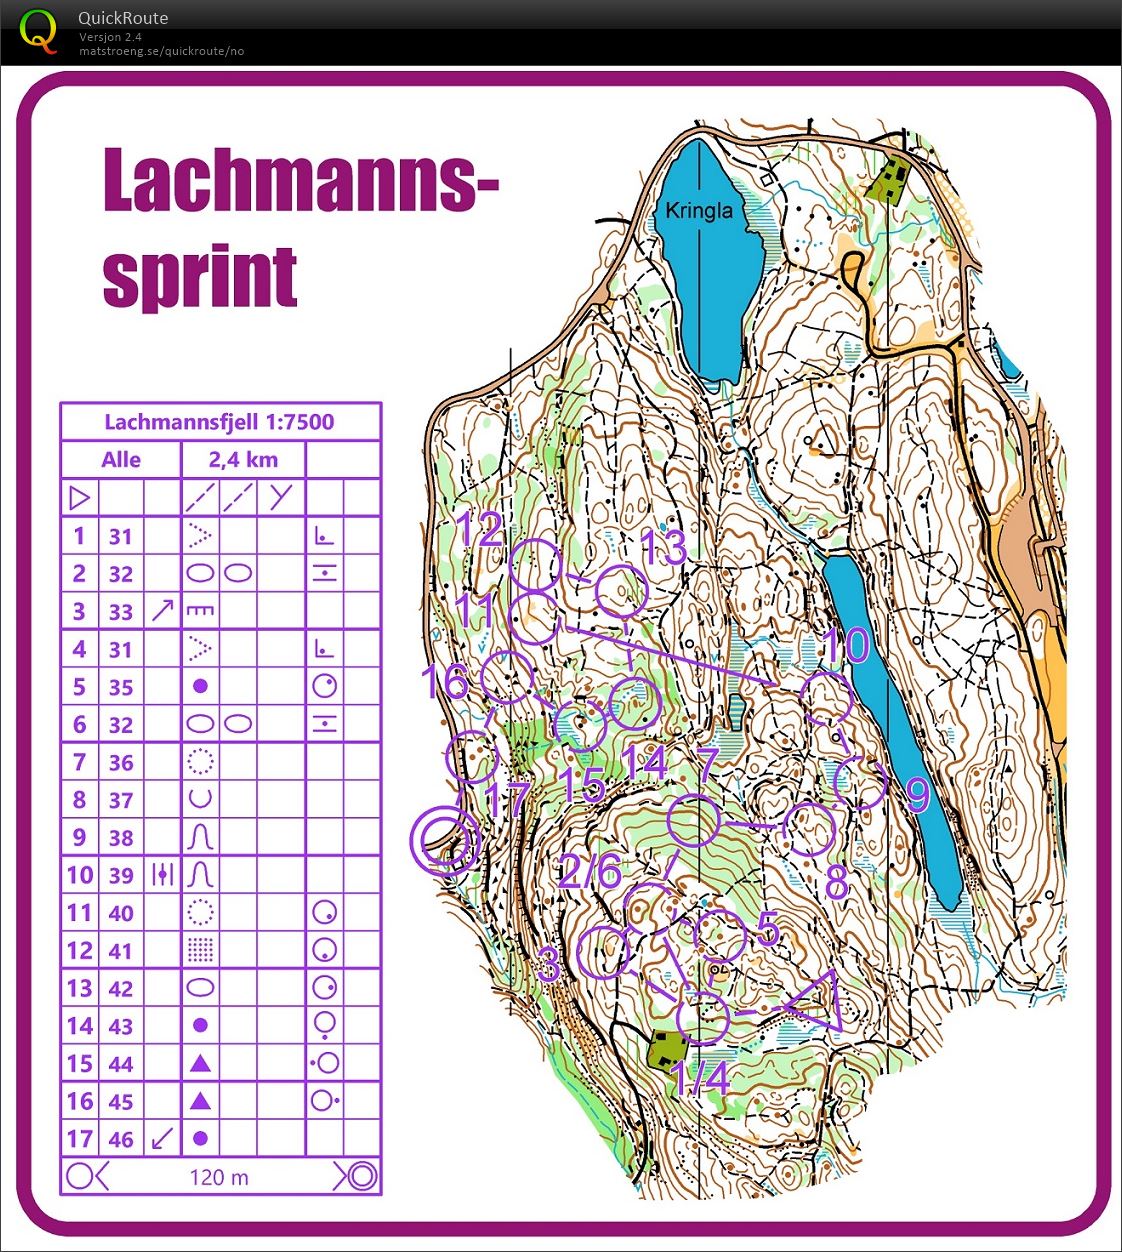 Lachmannssprint (2020-02-28)